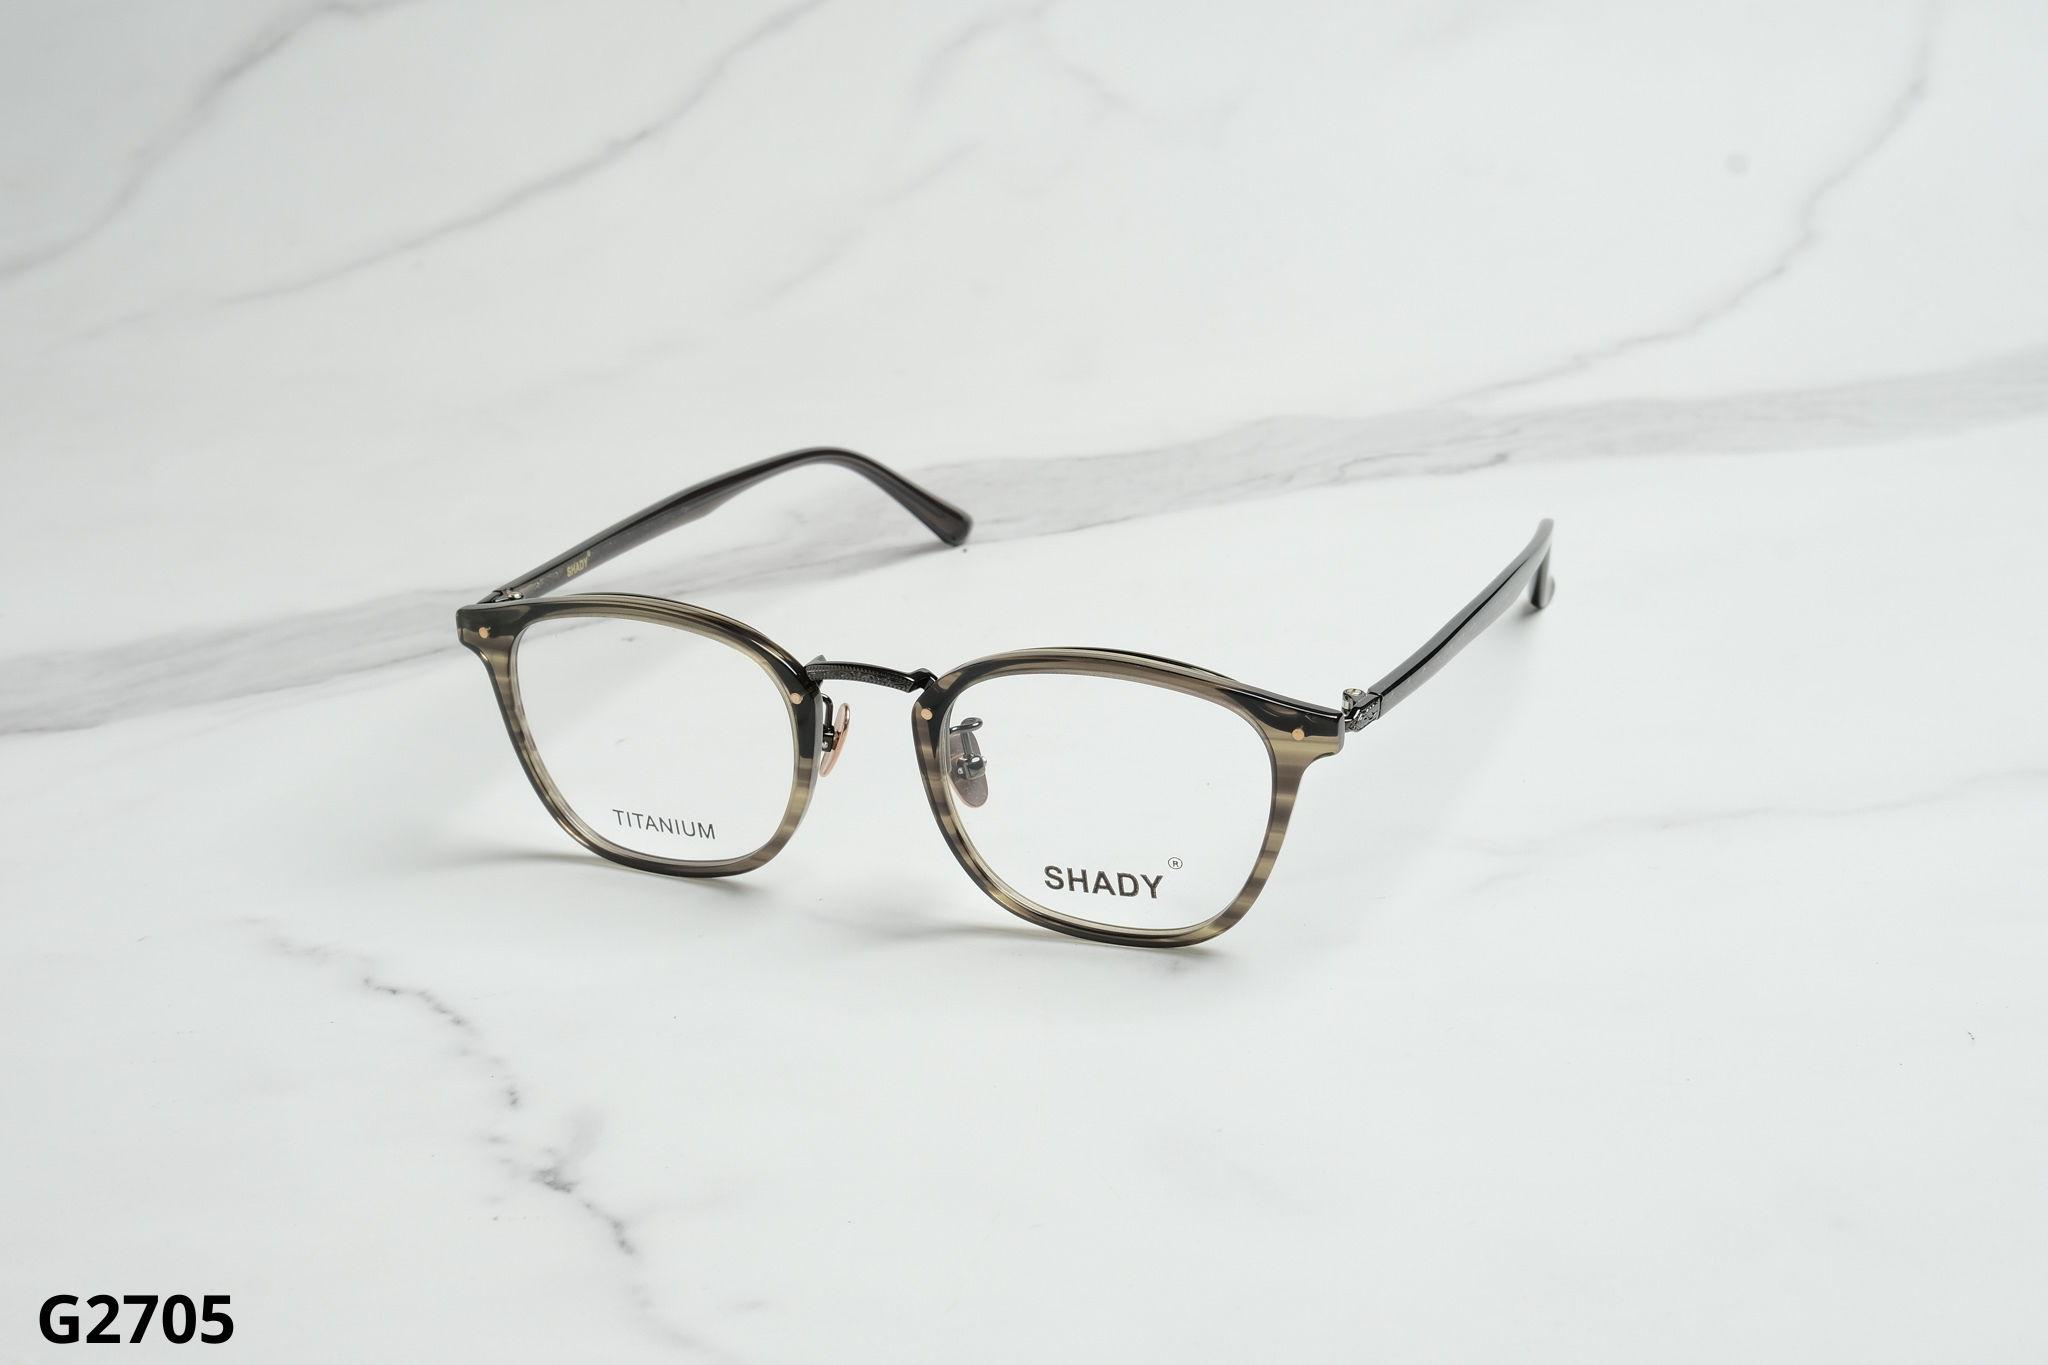  SHADY Eyewear - Glasses - G2705 